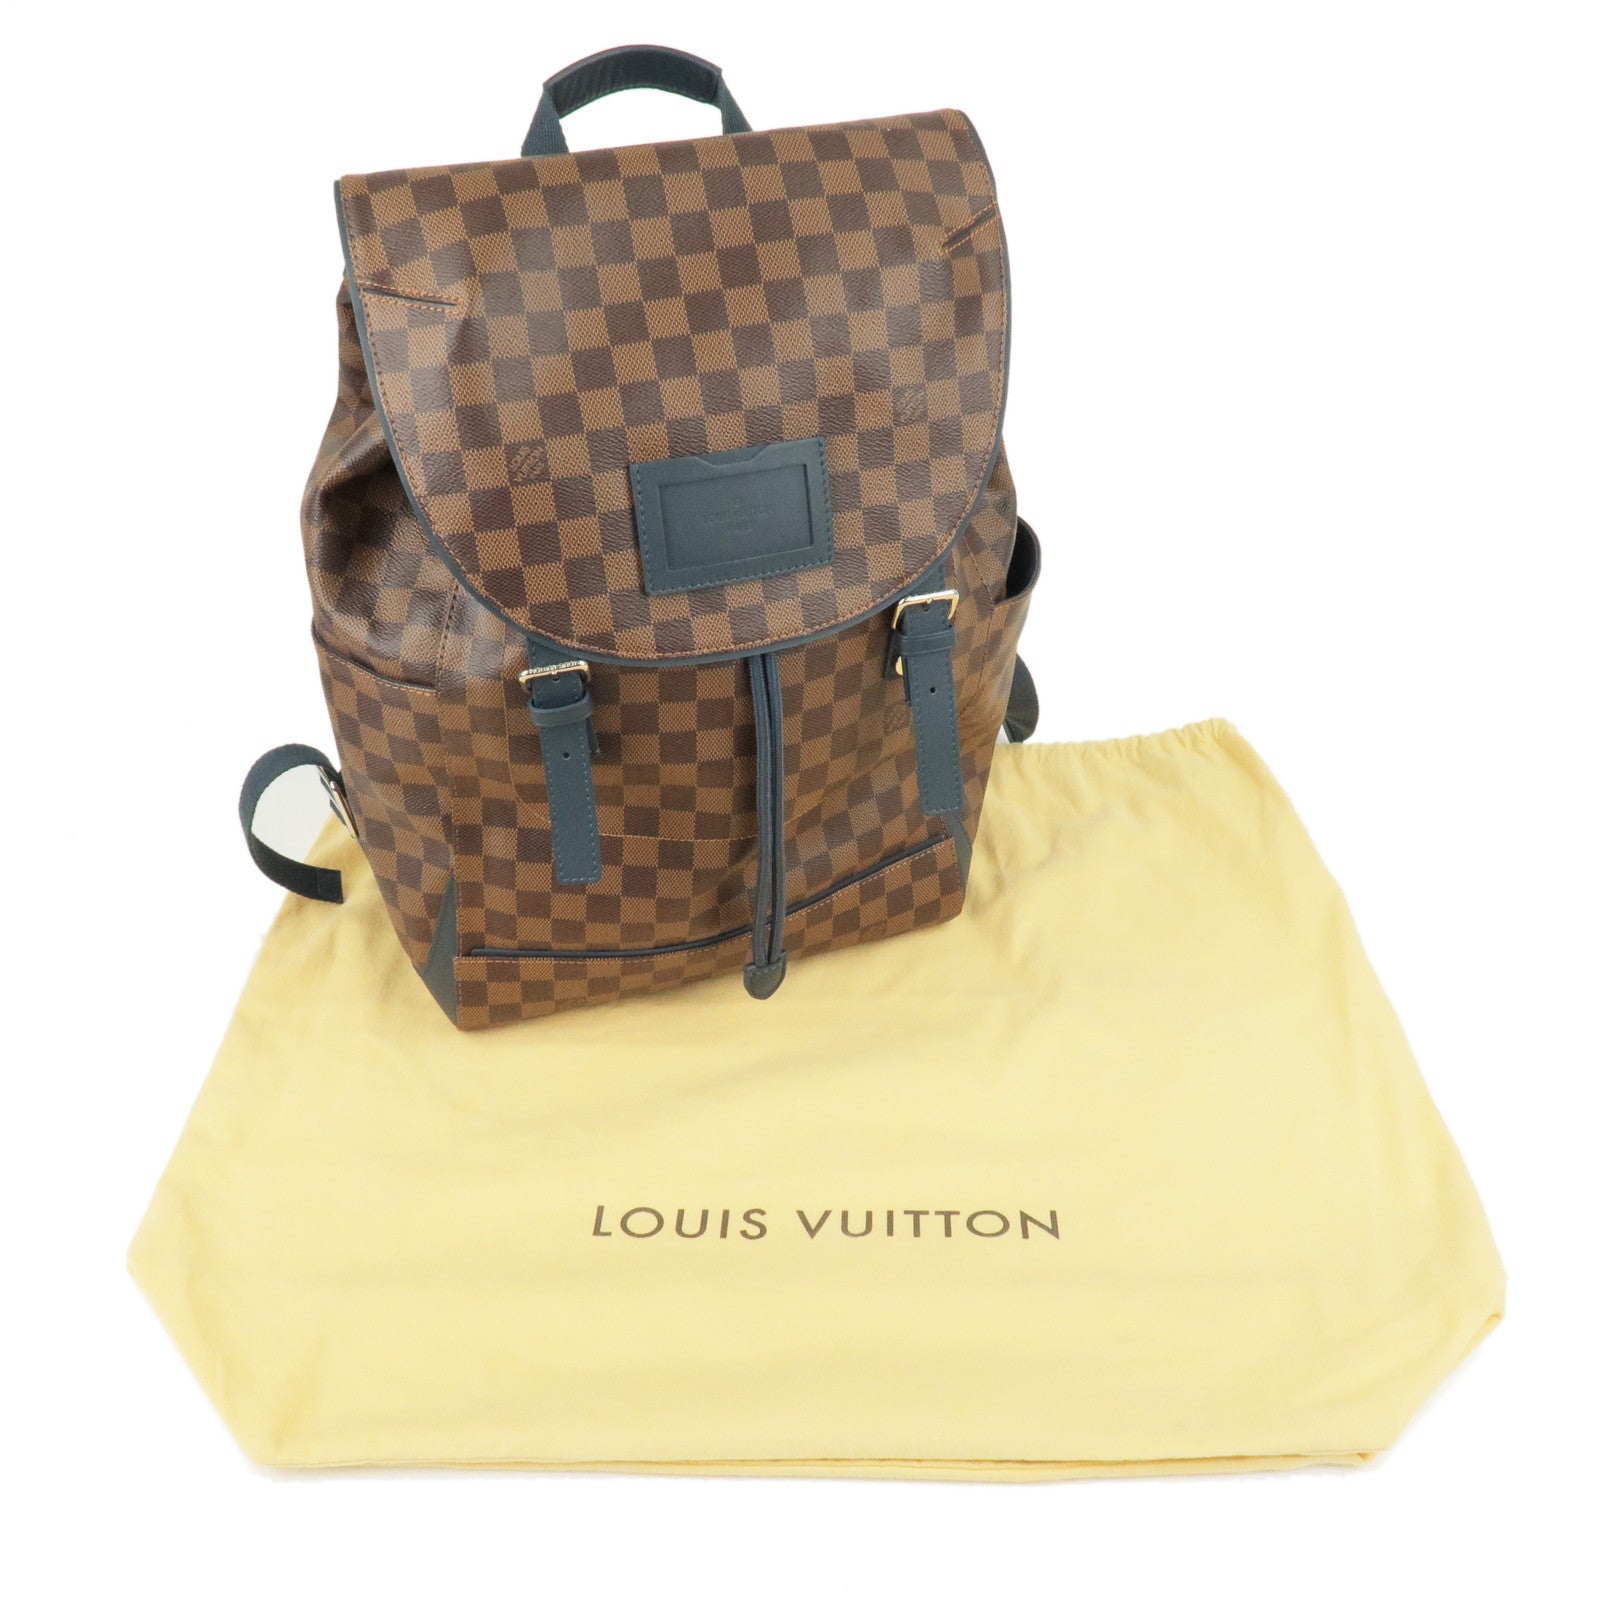 Pack - Vuitton - Back - Runner - Ruck - N41377 – dct - ep_vintage ORANGE  Store - Bag - Damier - Louis - Louis Vuitton pre-owned Steamer bag - Sack